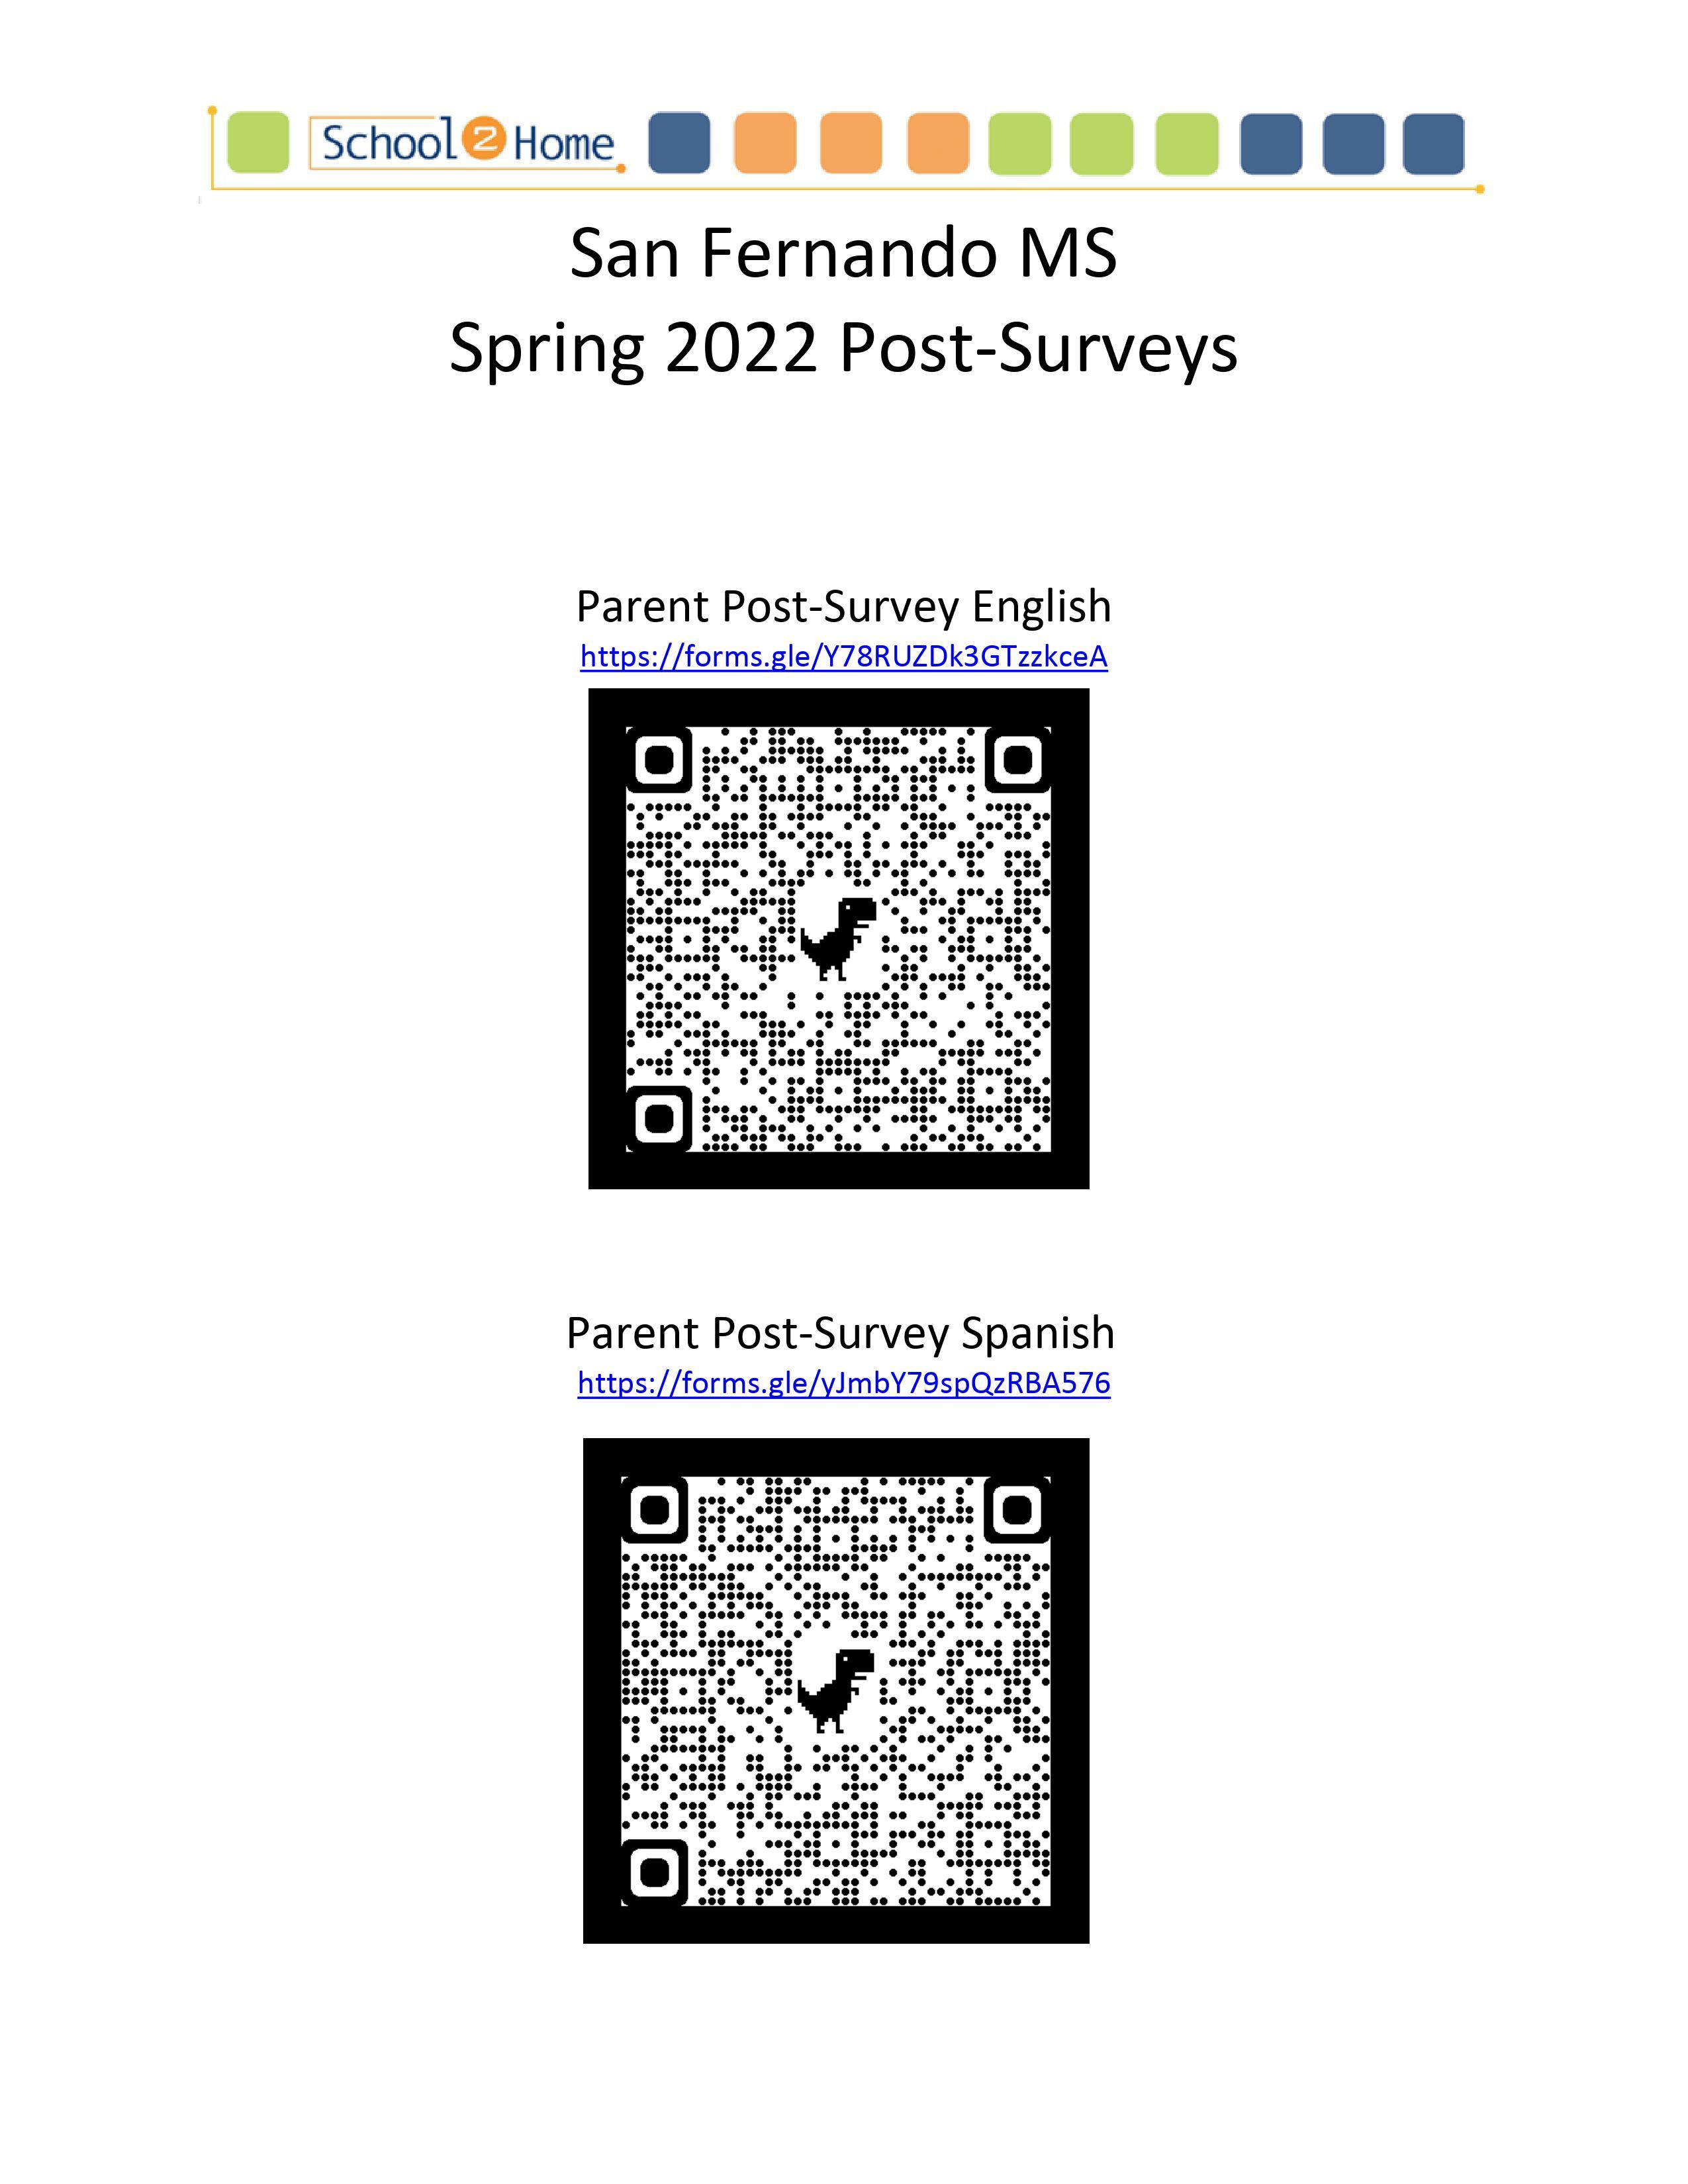 SFMS Spring 2022 Post Survey